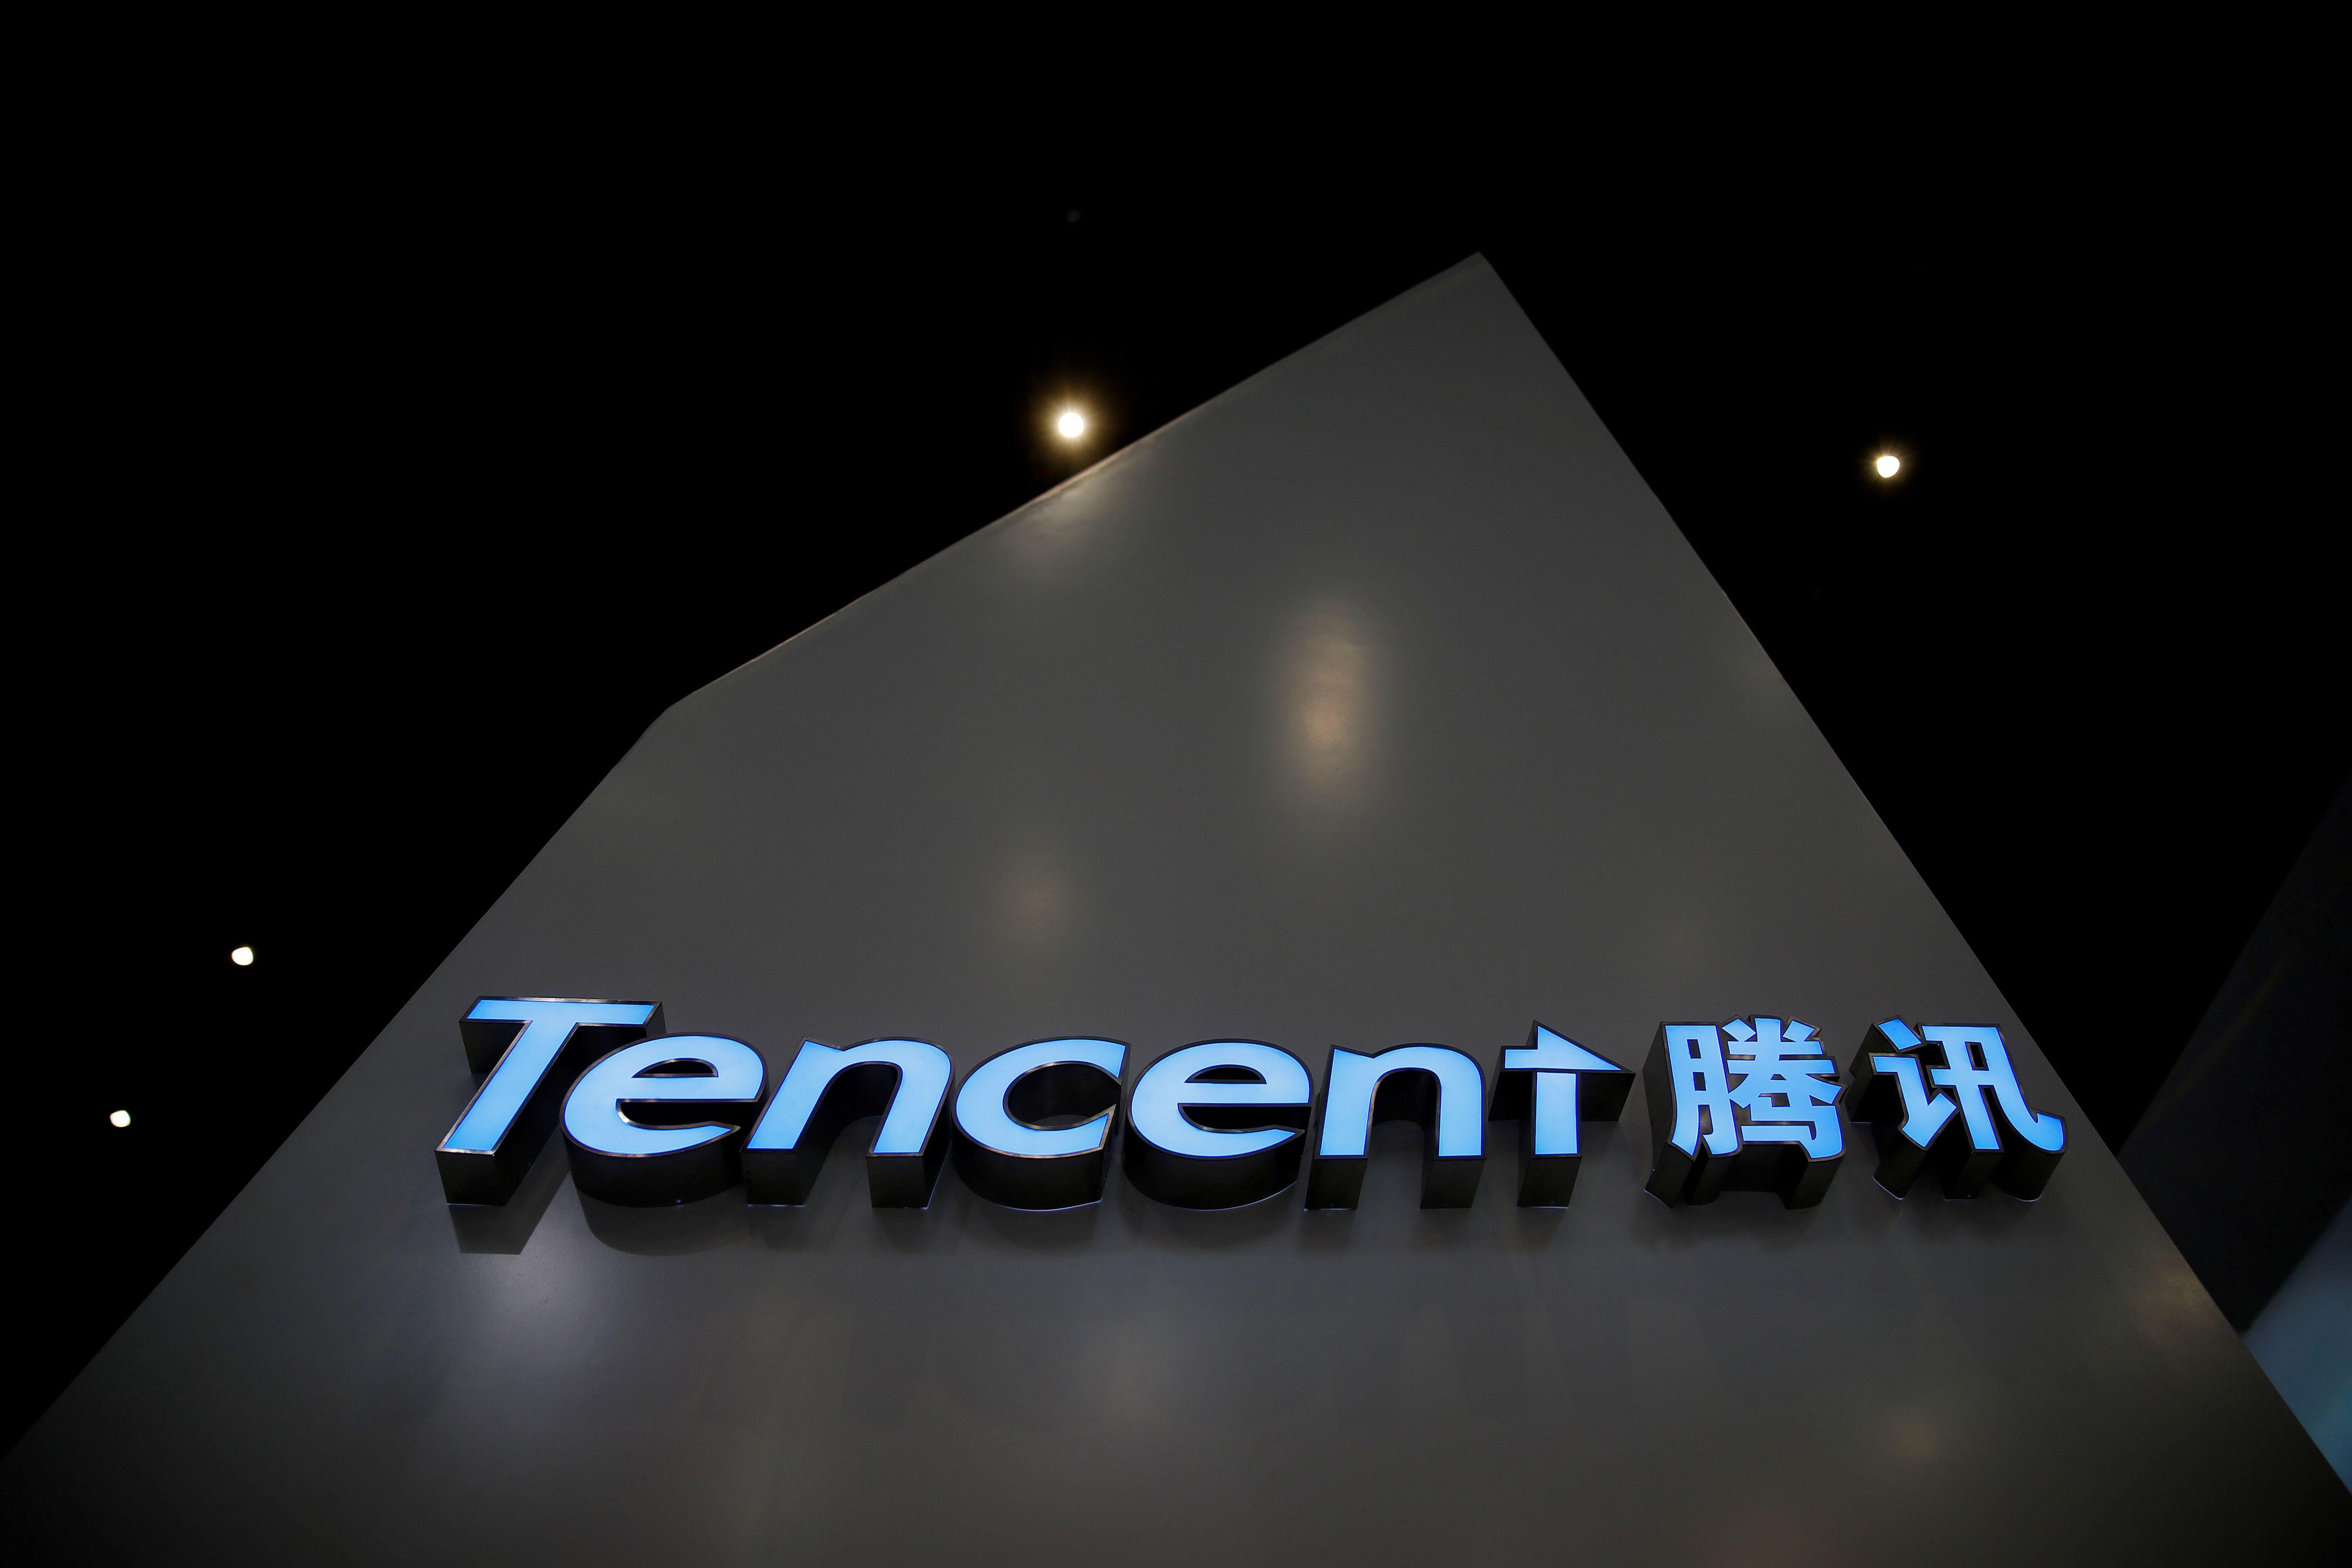 tencent gameloop client